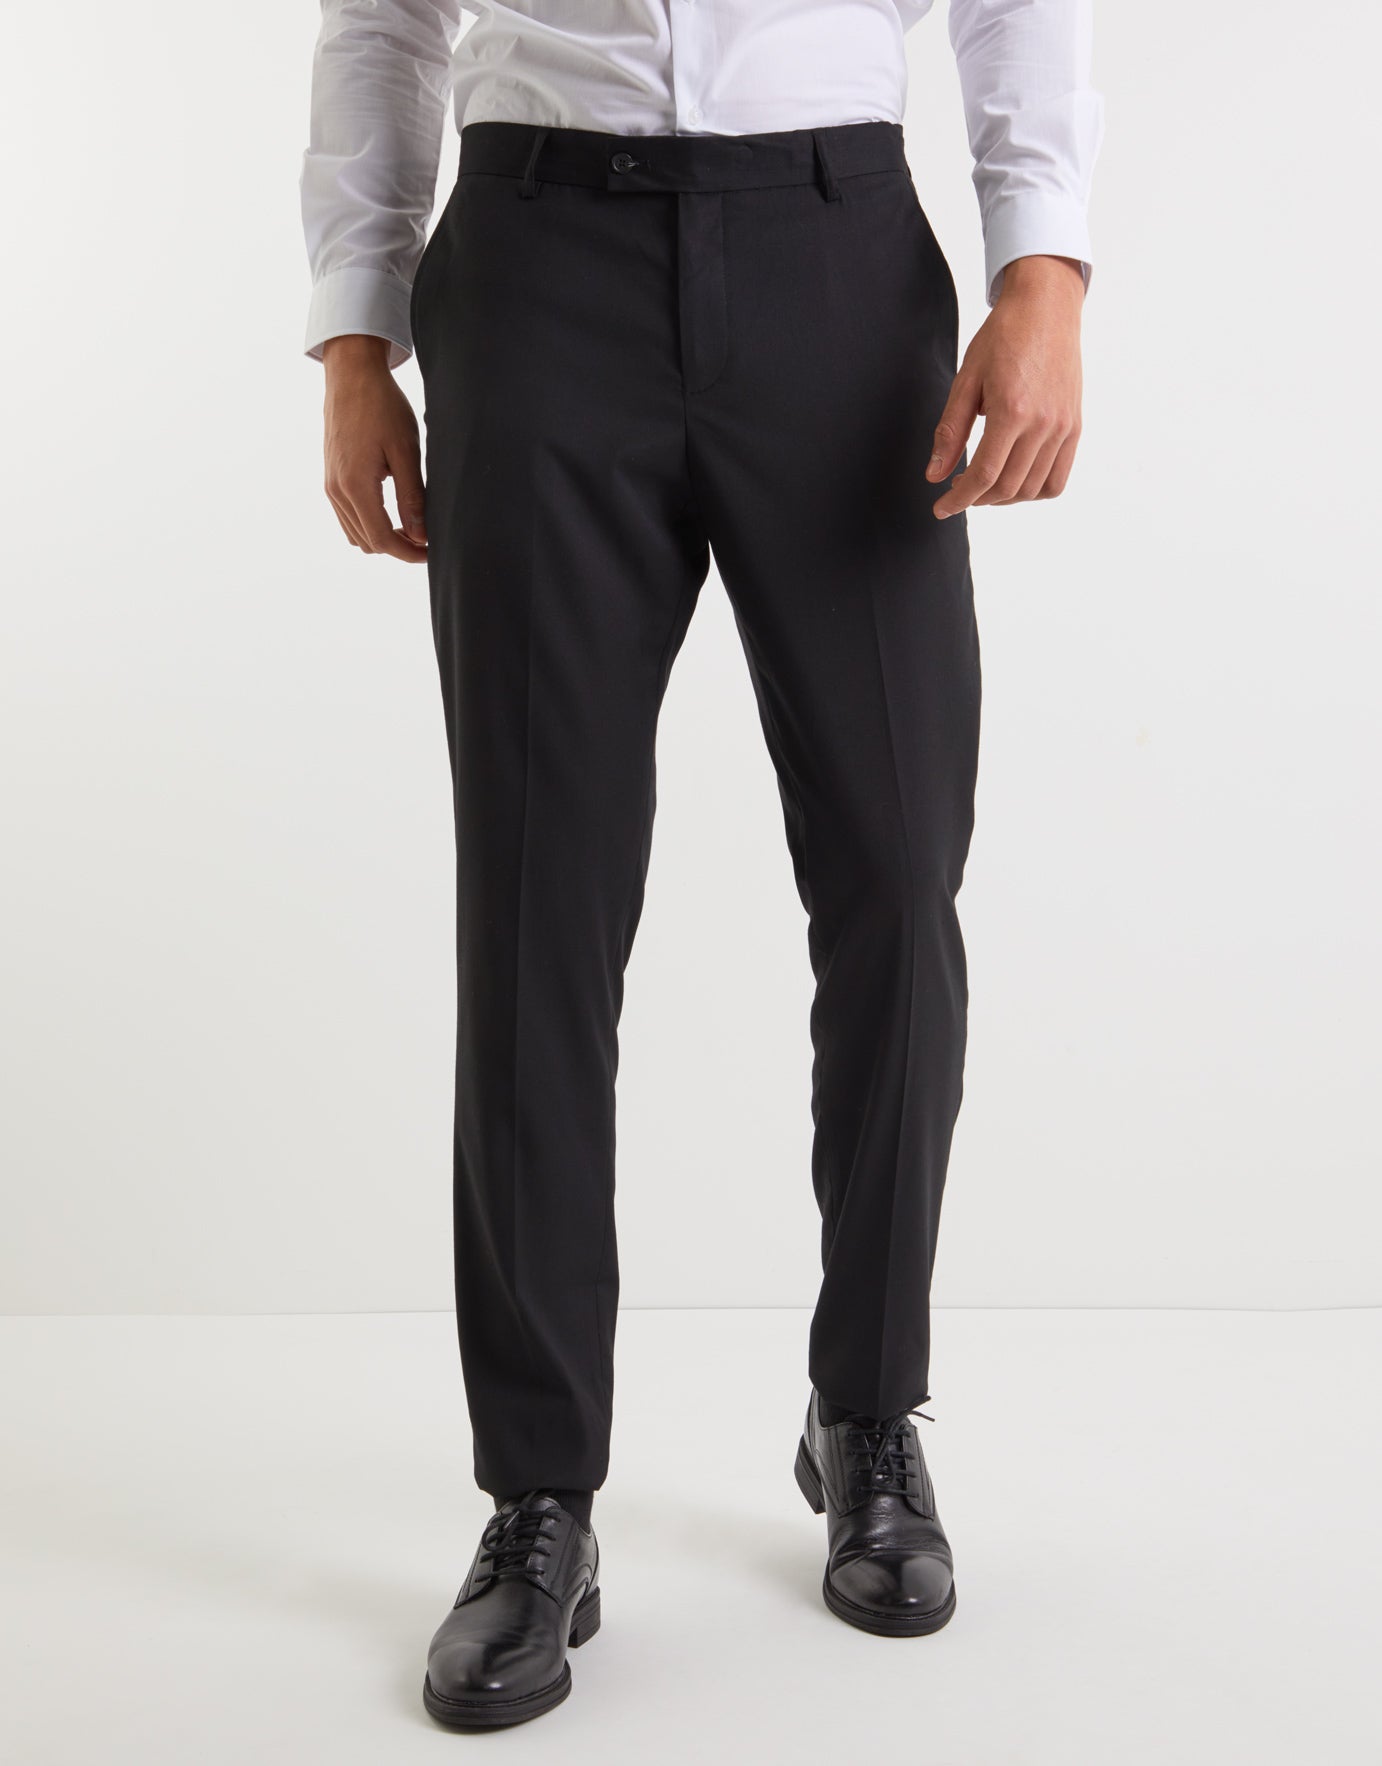 Black Linen Narrow Fit Formal Pants